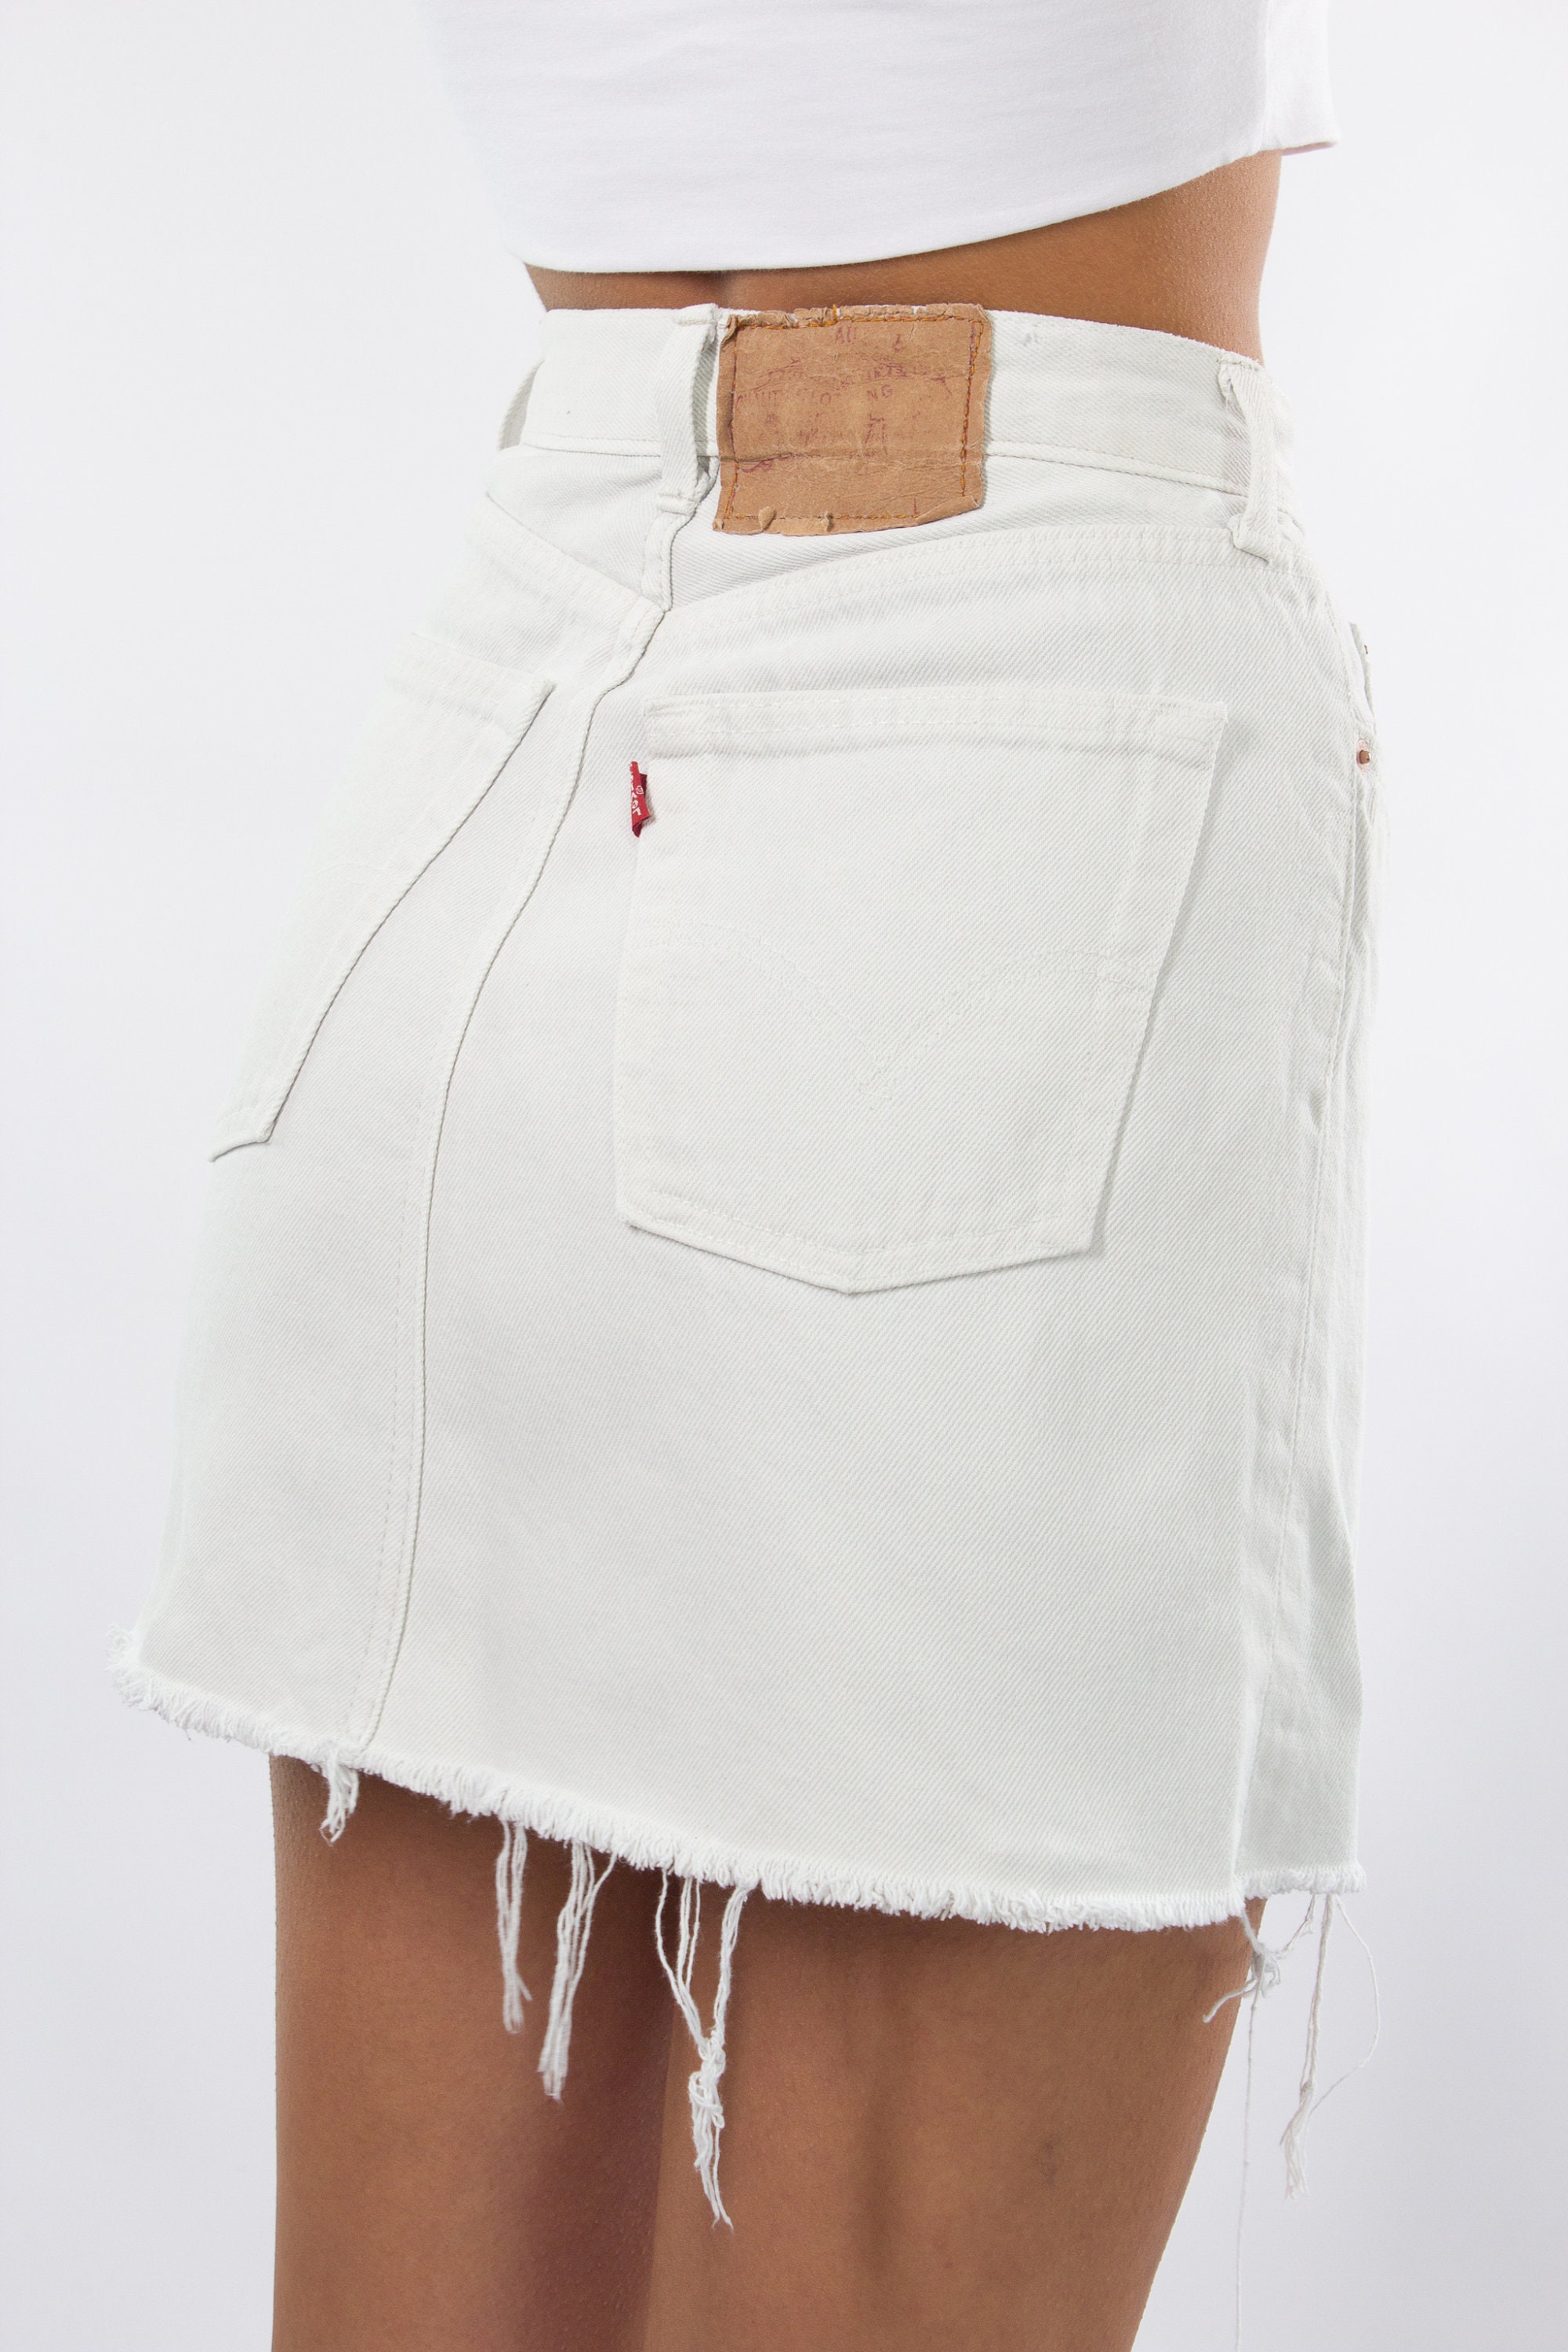 Buy White Levis Denim Skirt 2 Sizes XS & S Online in India - Etsy